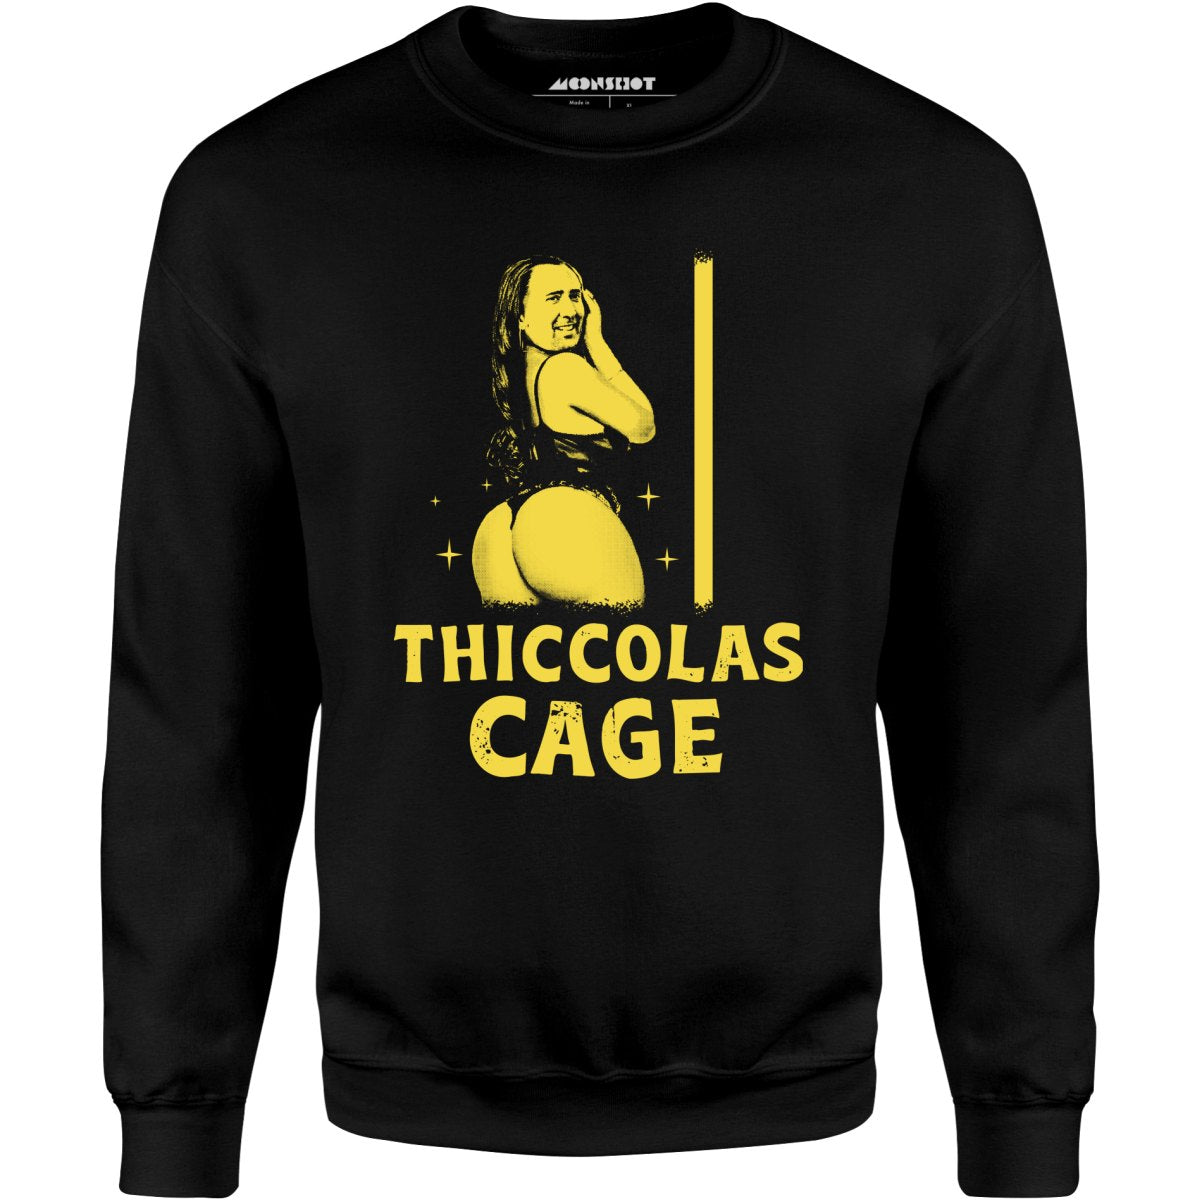 Thiccolas Cage - Unisex Sweatshirt